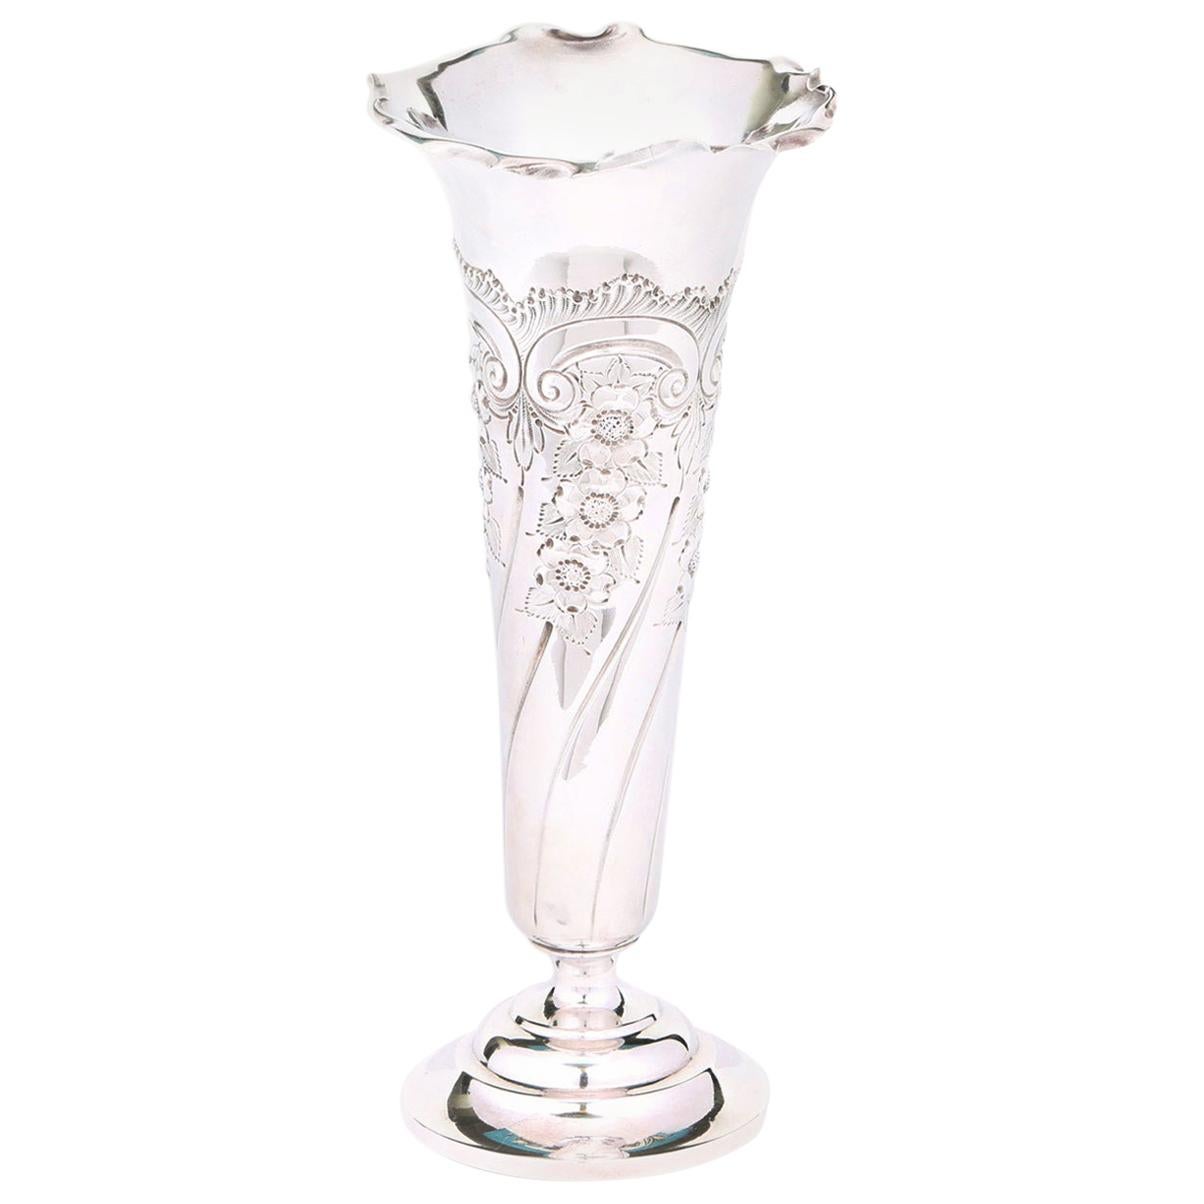 English Silver Plated Decorative Vase